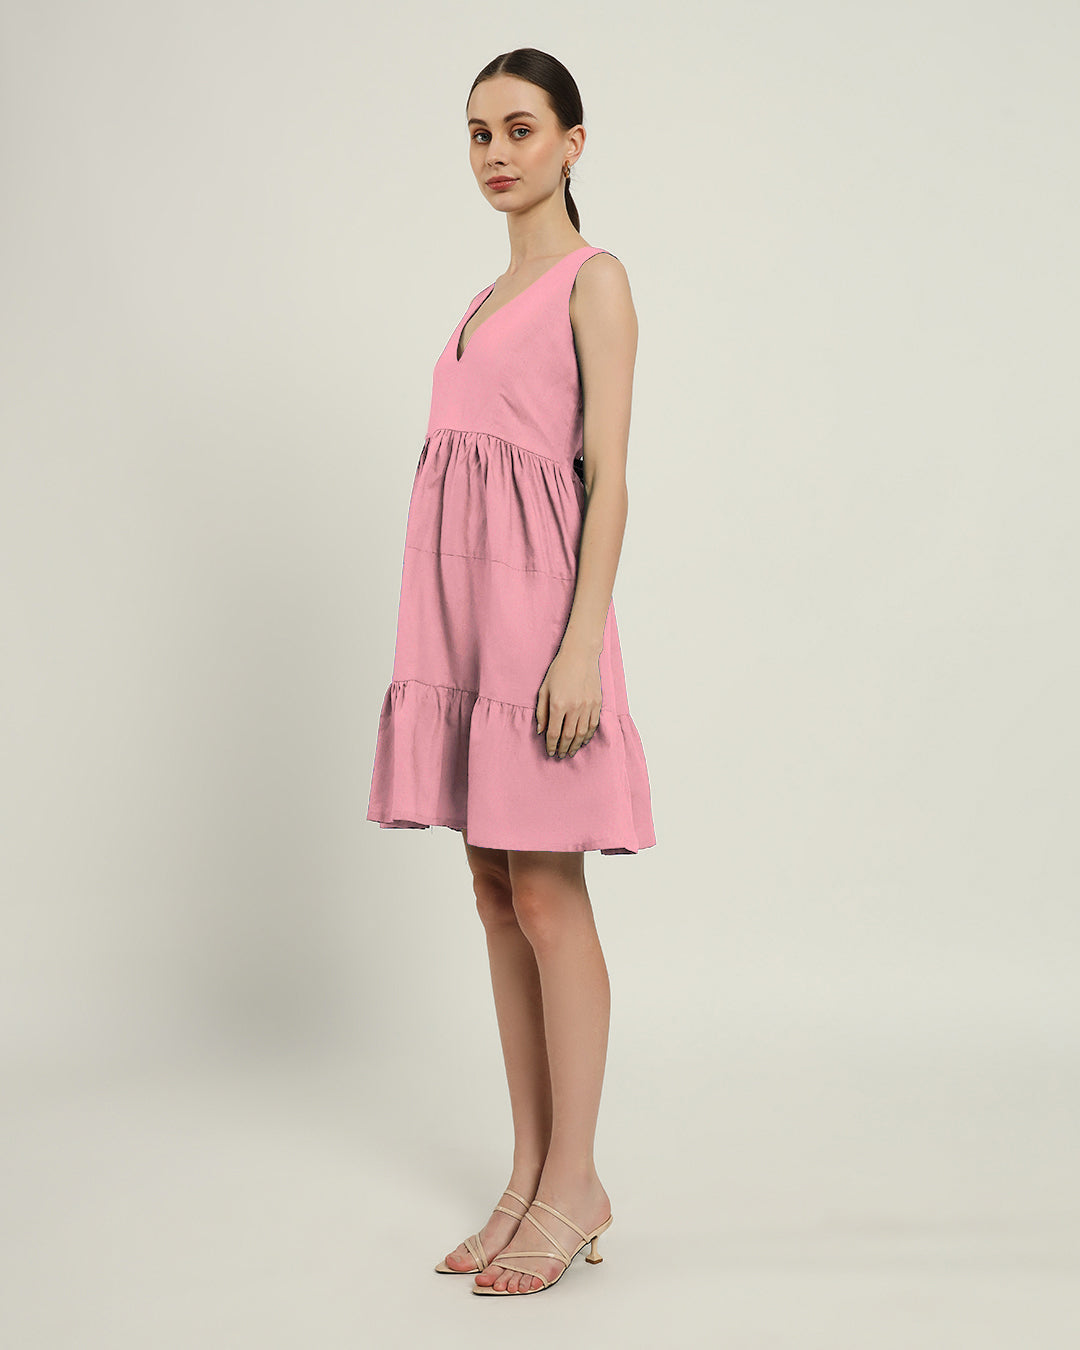 The Minsk Fondant Pink Dress